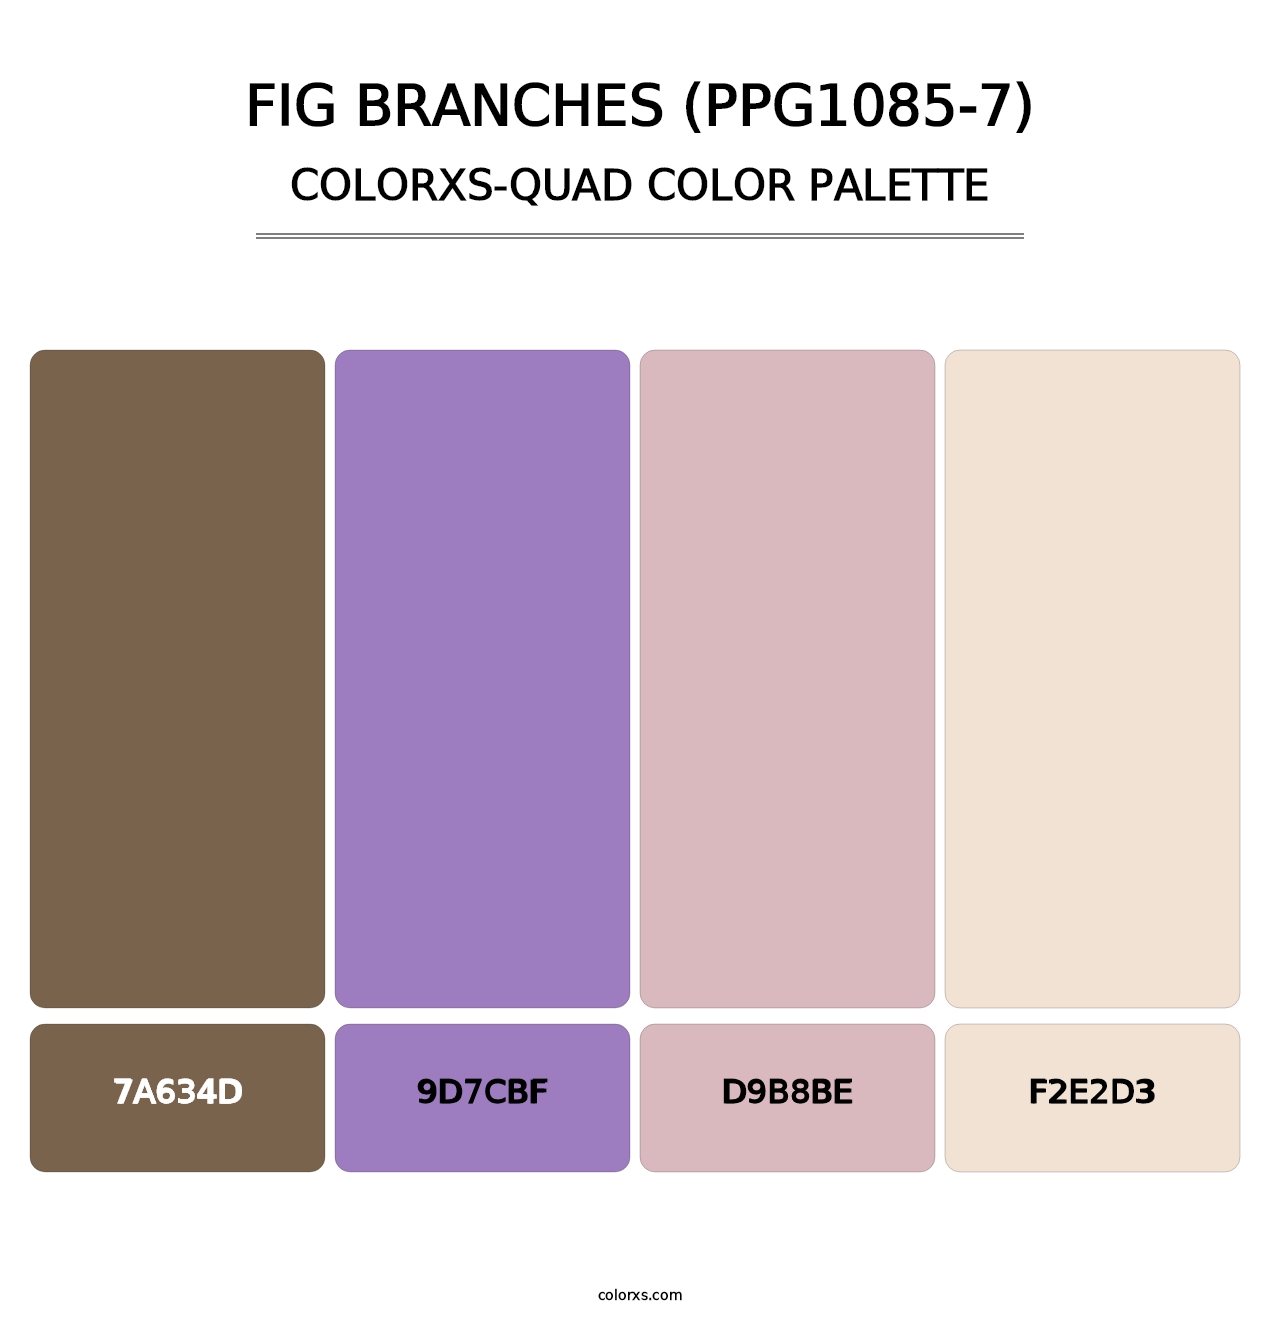 Fig Branches (PPG1085-7) - Colorxs Quad Palette